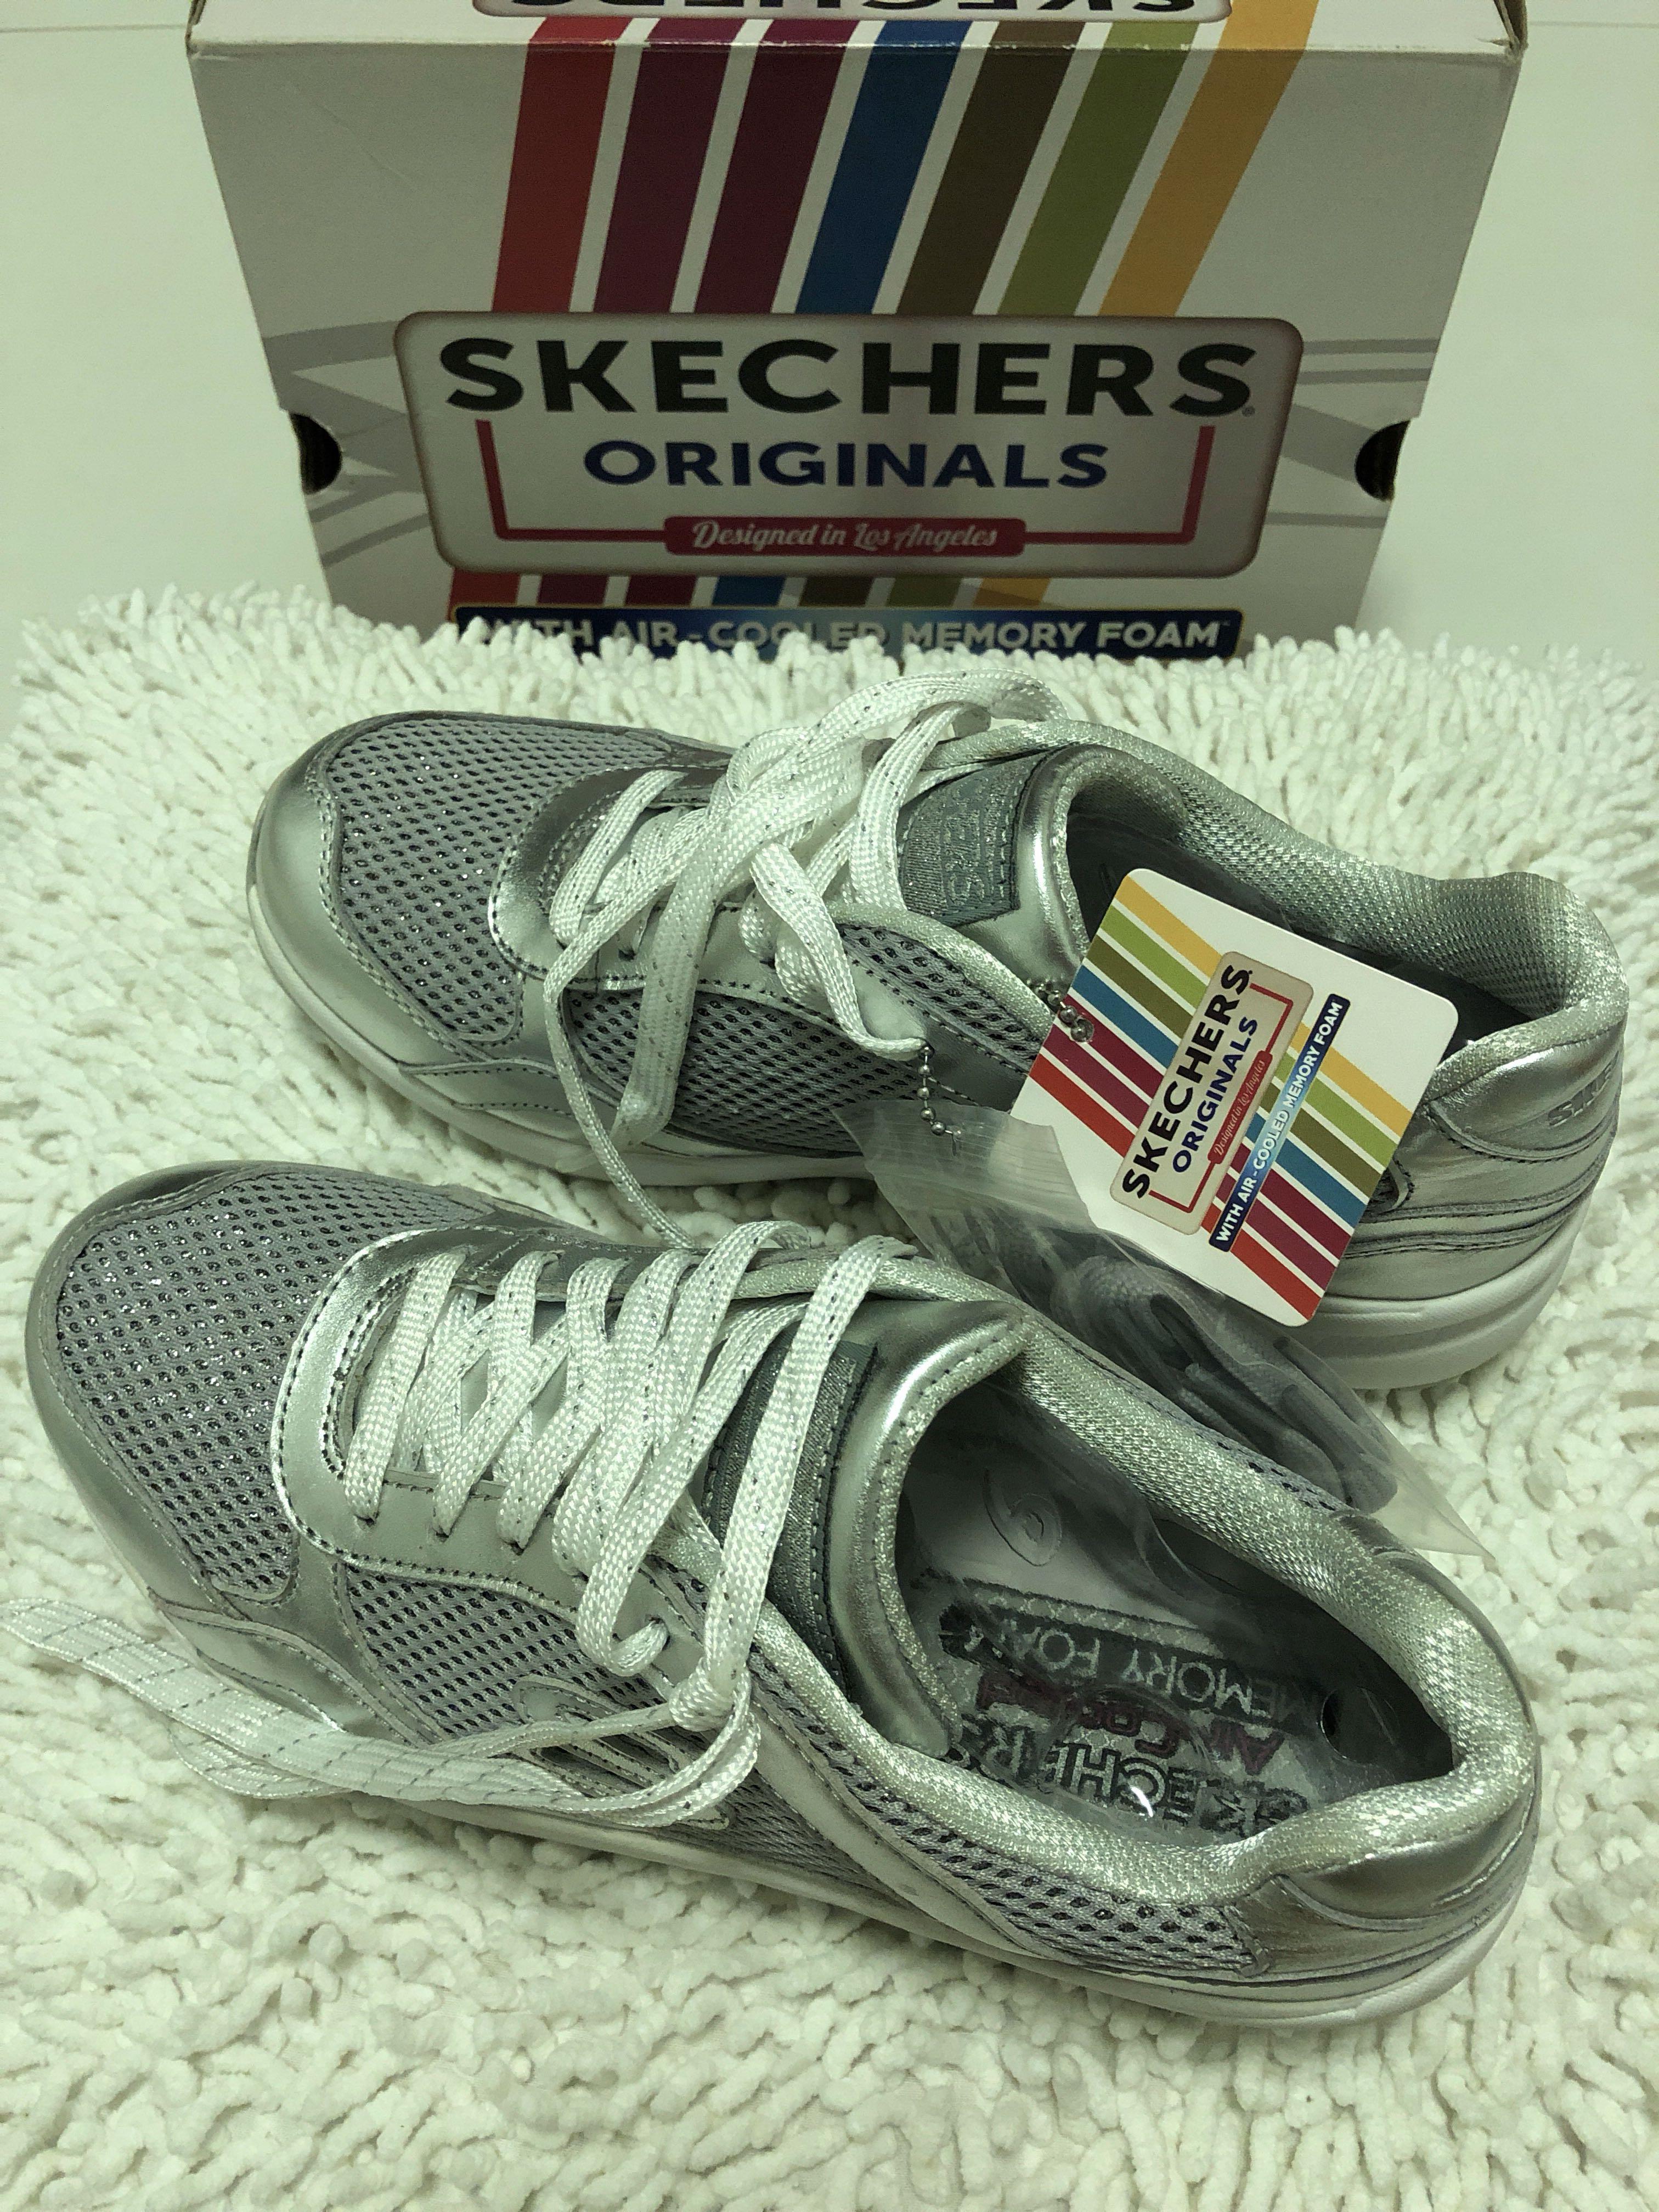 Skechers Originals Sneakers With Air- Cooled Memory Foam, Luxury 